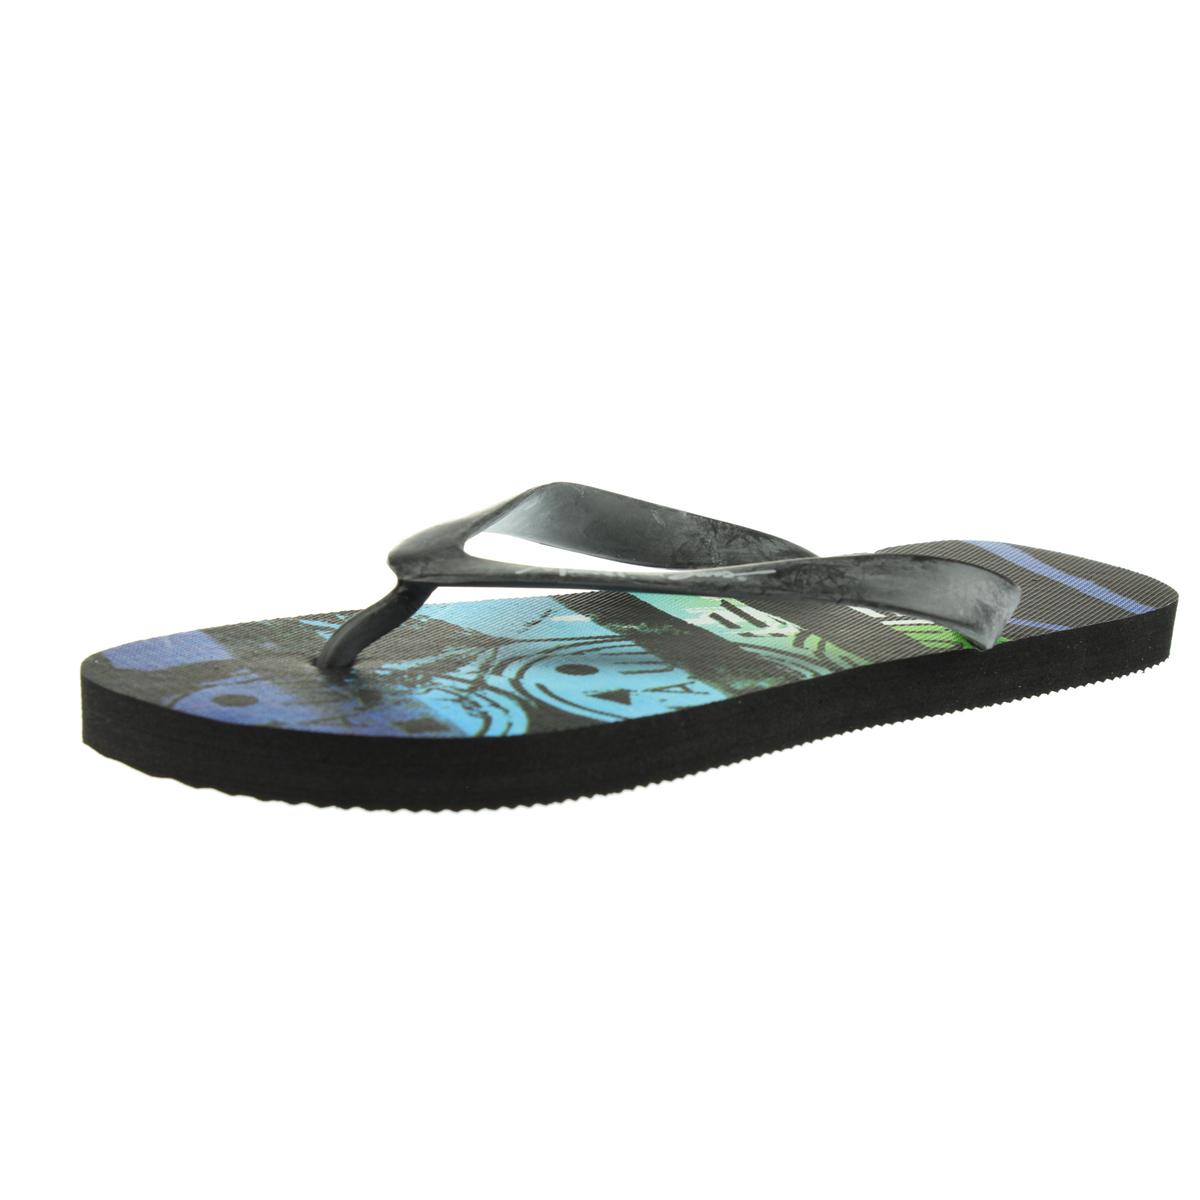 Maui and Sons 6946 Mens Graphic Slide Flip-Flops Sandals BHFO | eBay